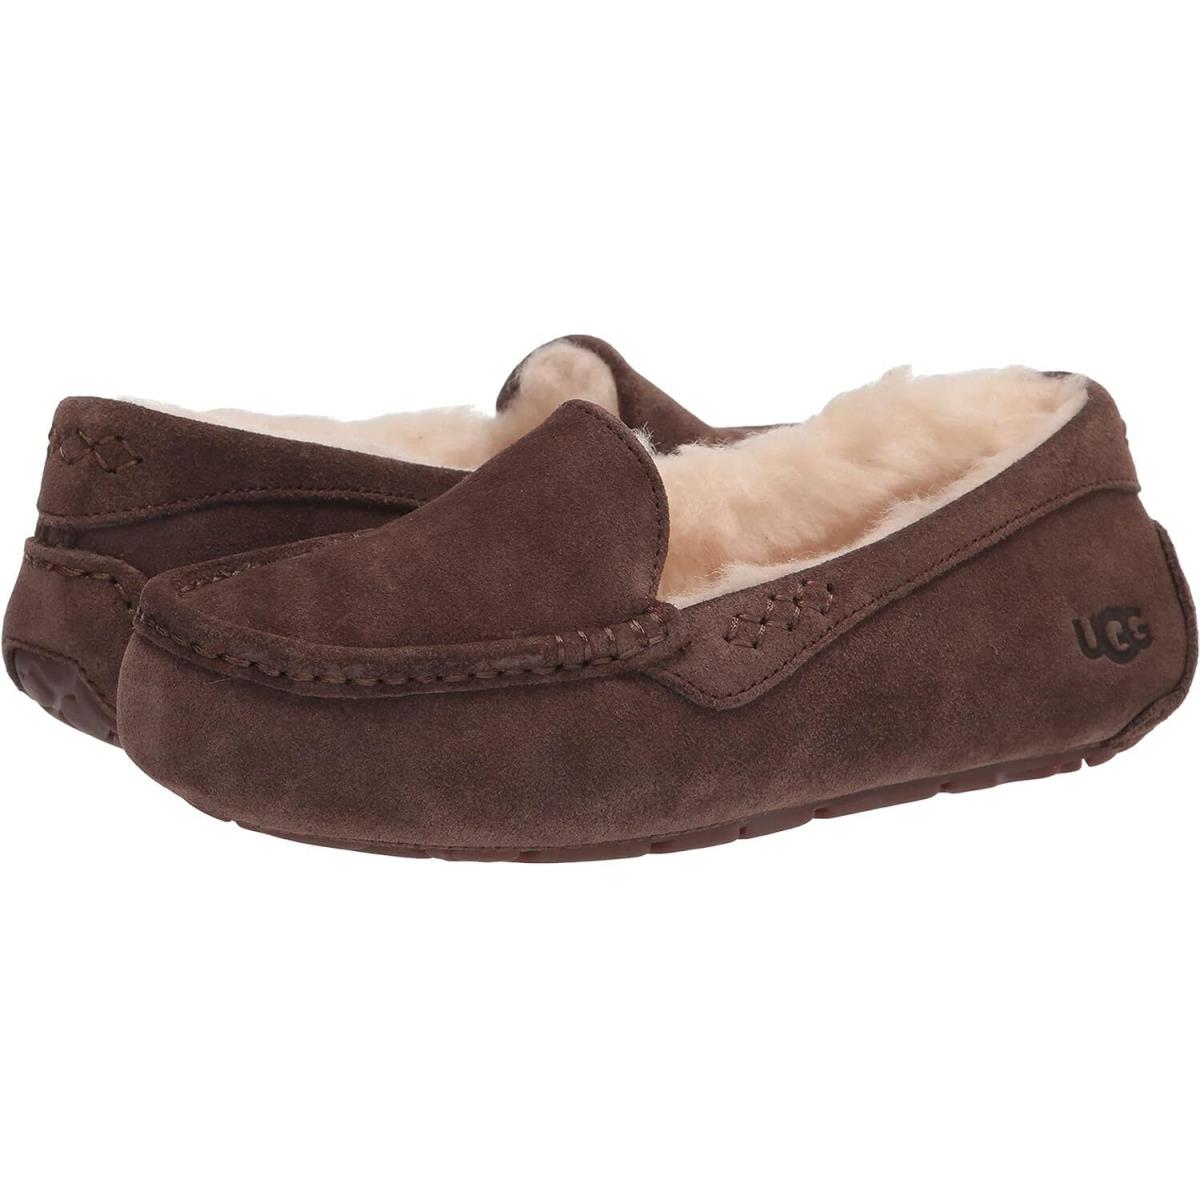 Women`s Shoes Ugg Ansley Indoor/outdoor Moccasin Slippers 1106878 Espresso - Brown